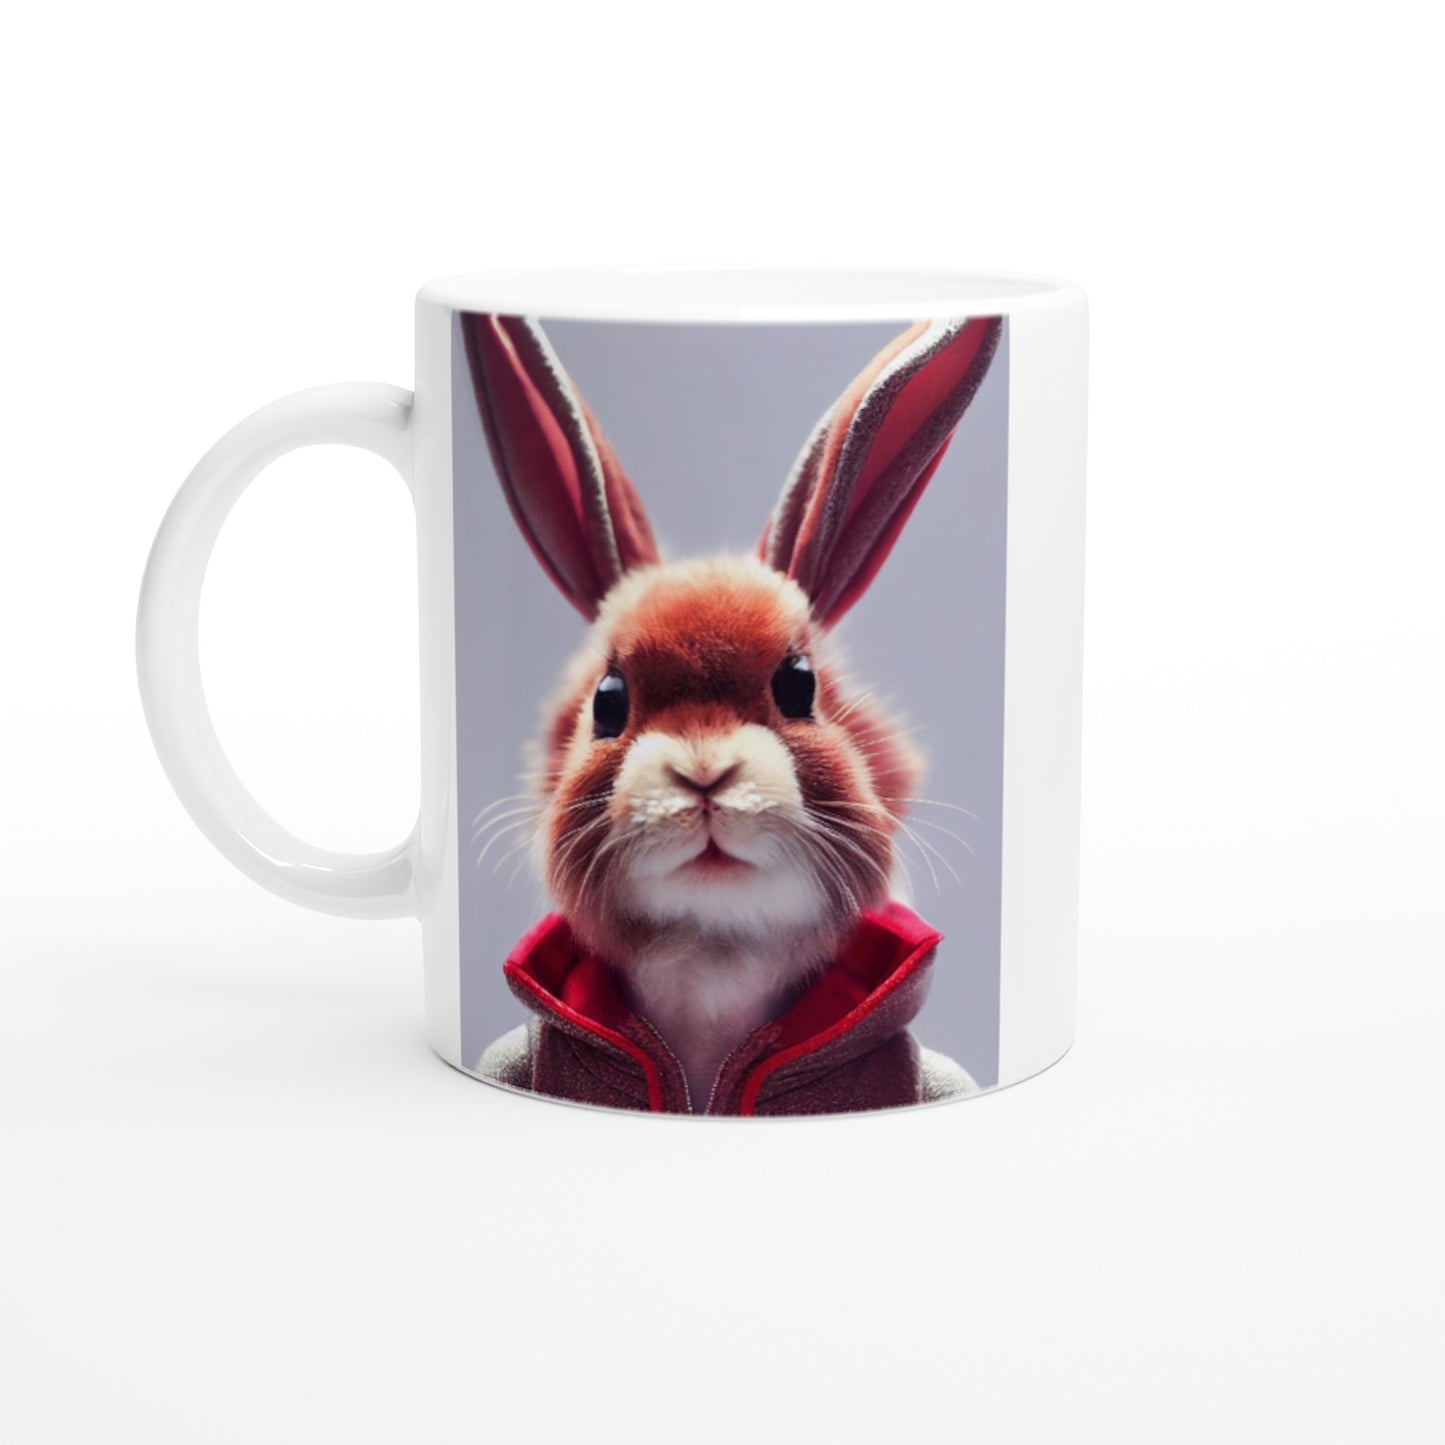 Personalisierbare Tasse - Bunny in grey red tracksuit - "Julius" - Acryl art - personalized mug - customized mug - Cute rabbit - Marke:- Pixelboys - Brand - Art Prints - Marke - Wandkunst - Papierstärke: 250g/qm - Wall Art - Bunny crew - Skater Betty - Hasen Gang - Original - Künstler:Pixelboys - Poster with frame - Office Poster - Acrylkunst - Trend - Wandschmuck - Acrylbild - Atelier Canada - 